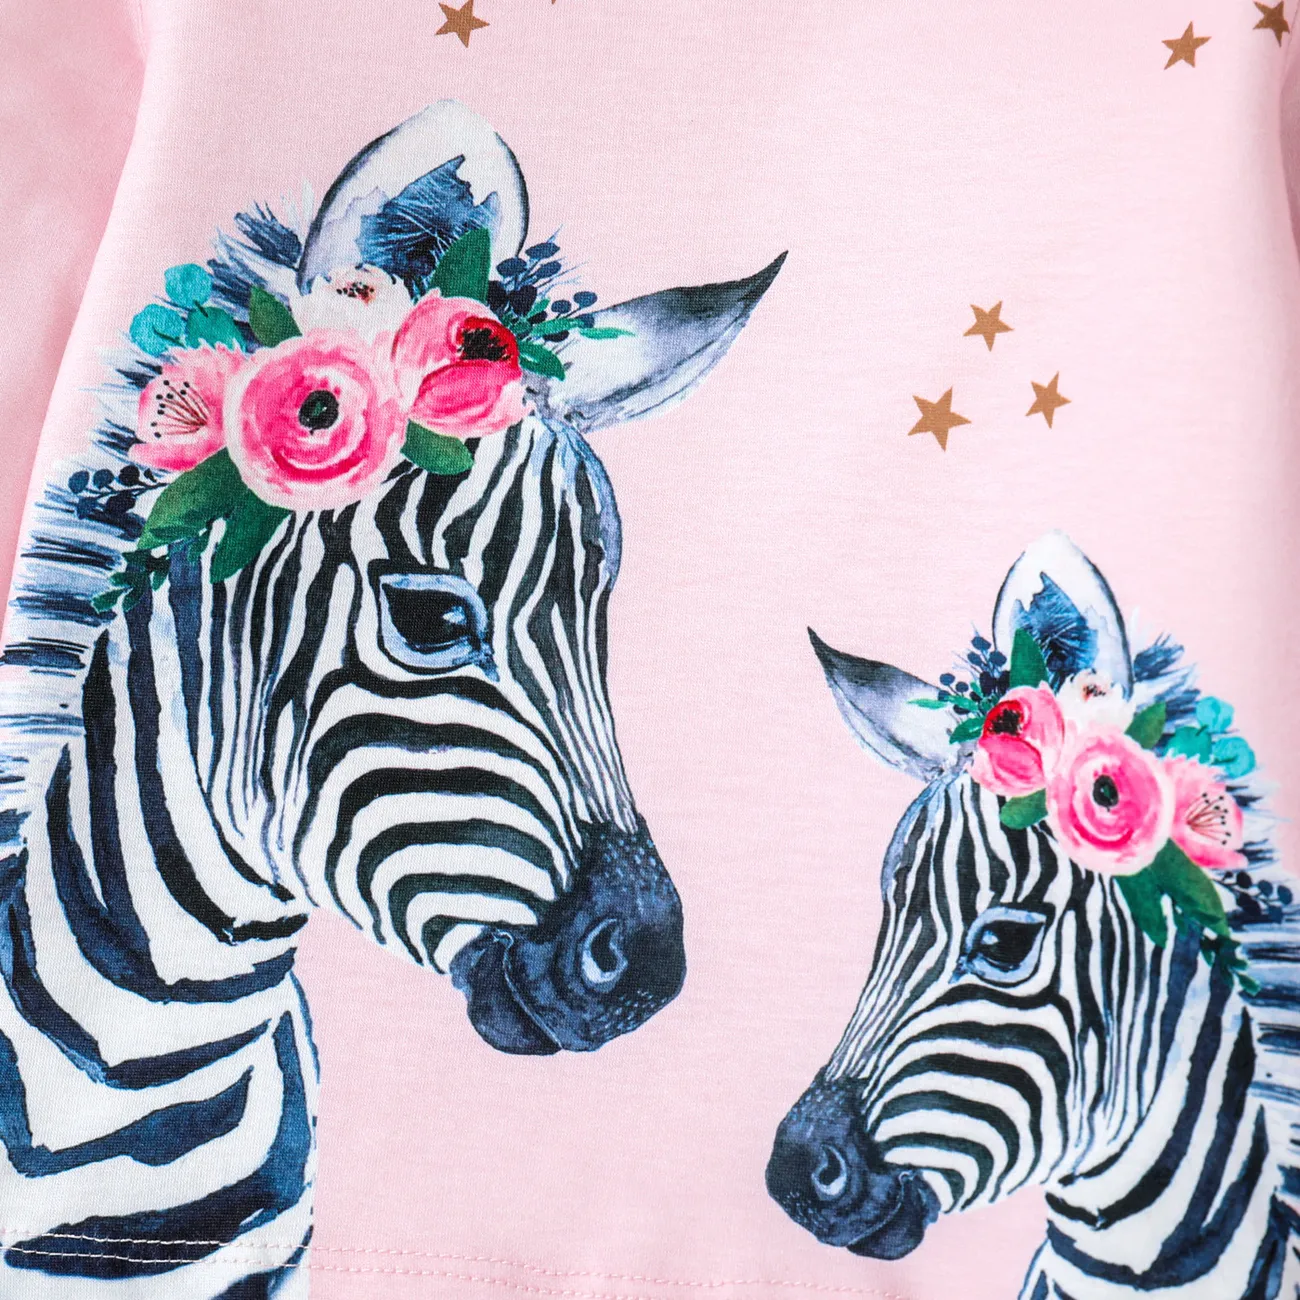 2pcs criança menina zebra animal print casual pijama set Rosa big image 1